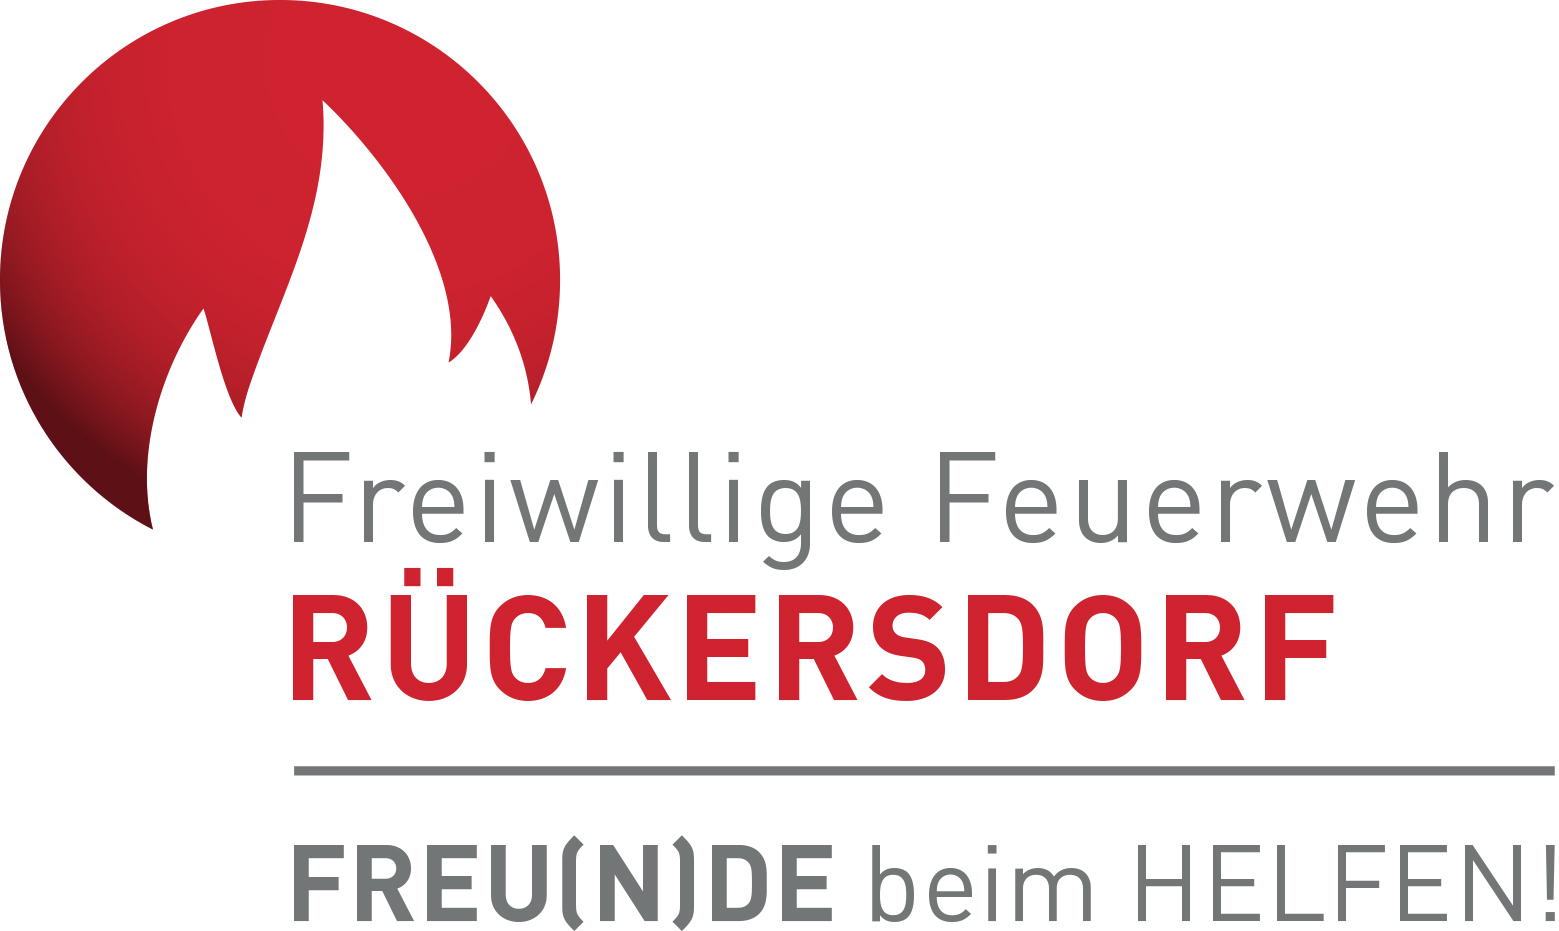 logo-ff-rueck-pos-rgb-mit-claim